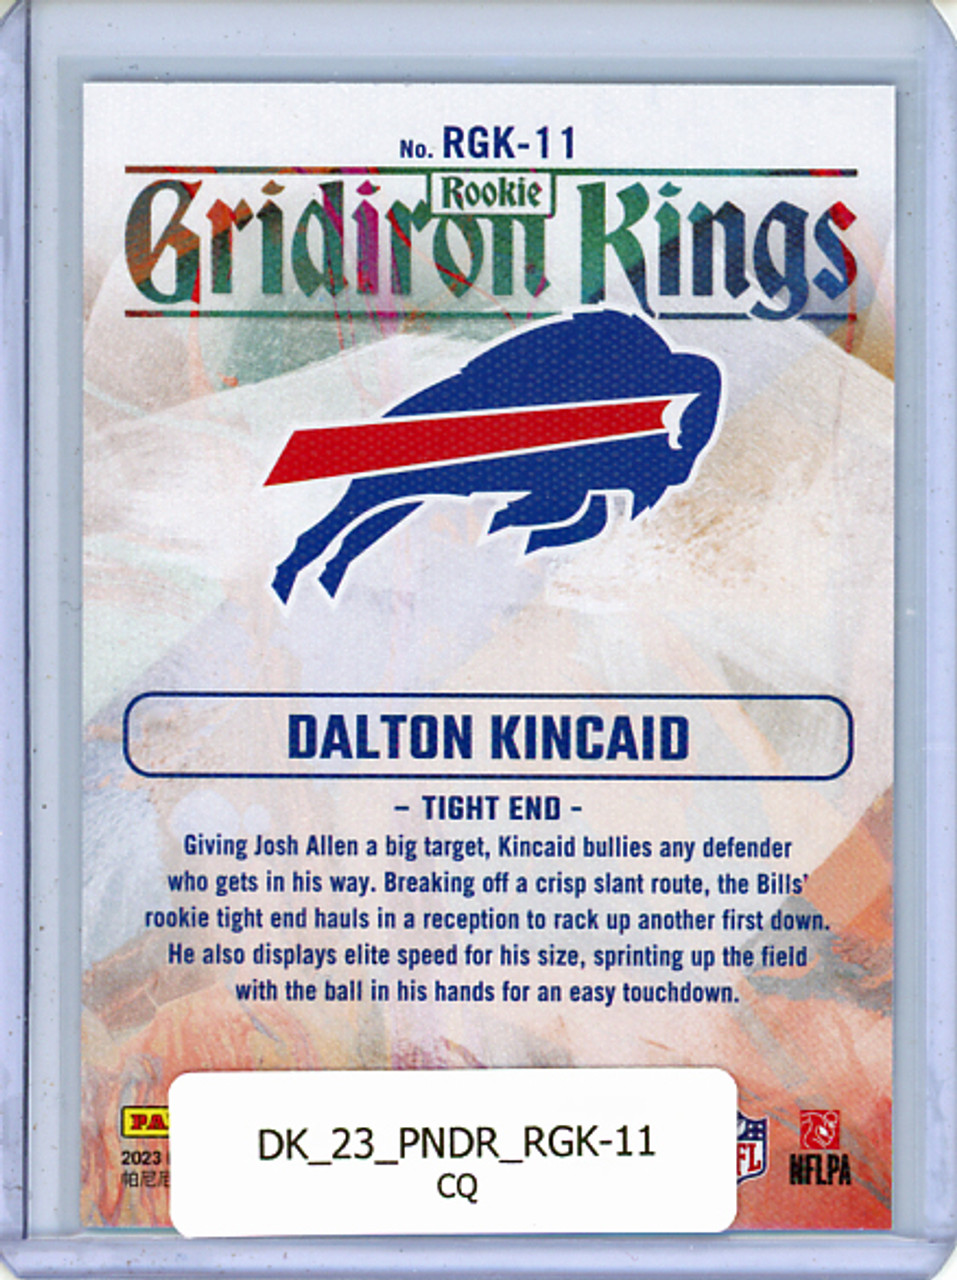 Dalton Kincaid 2023 Donruss, Rookie Gridiron Kings #RGK-11 (CQ)